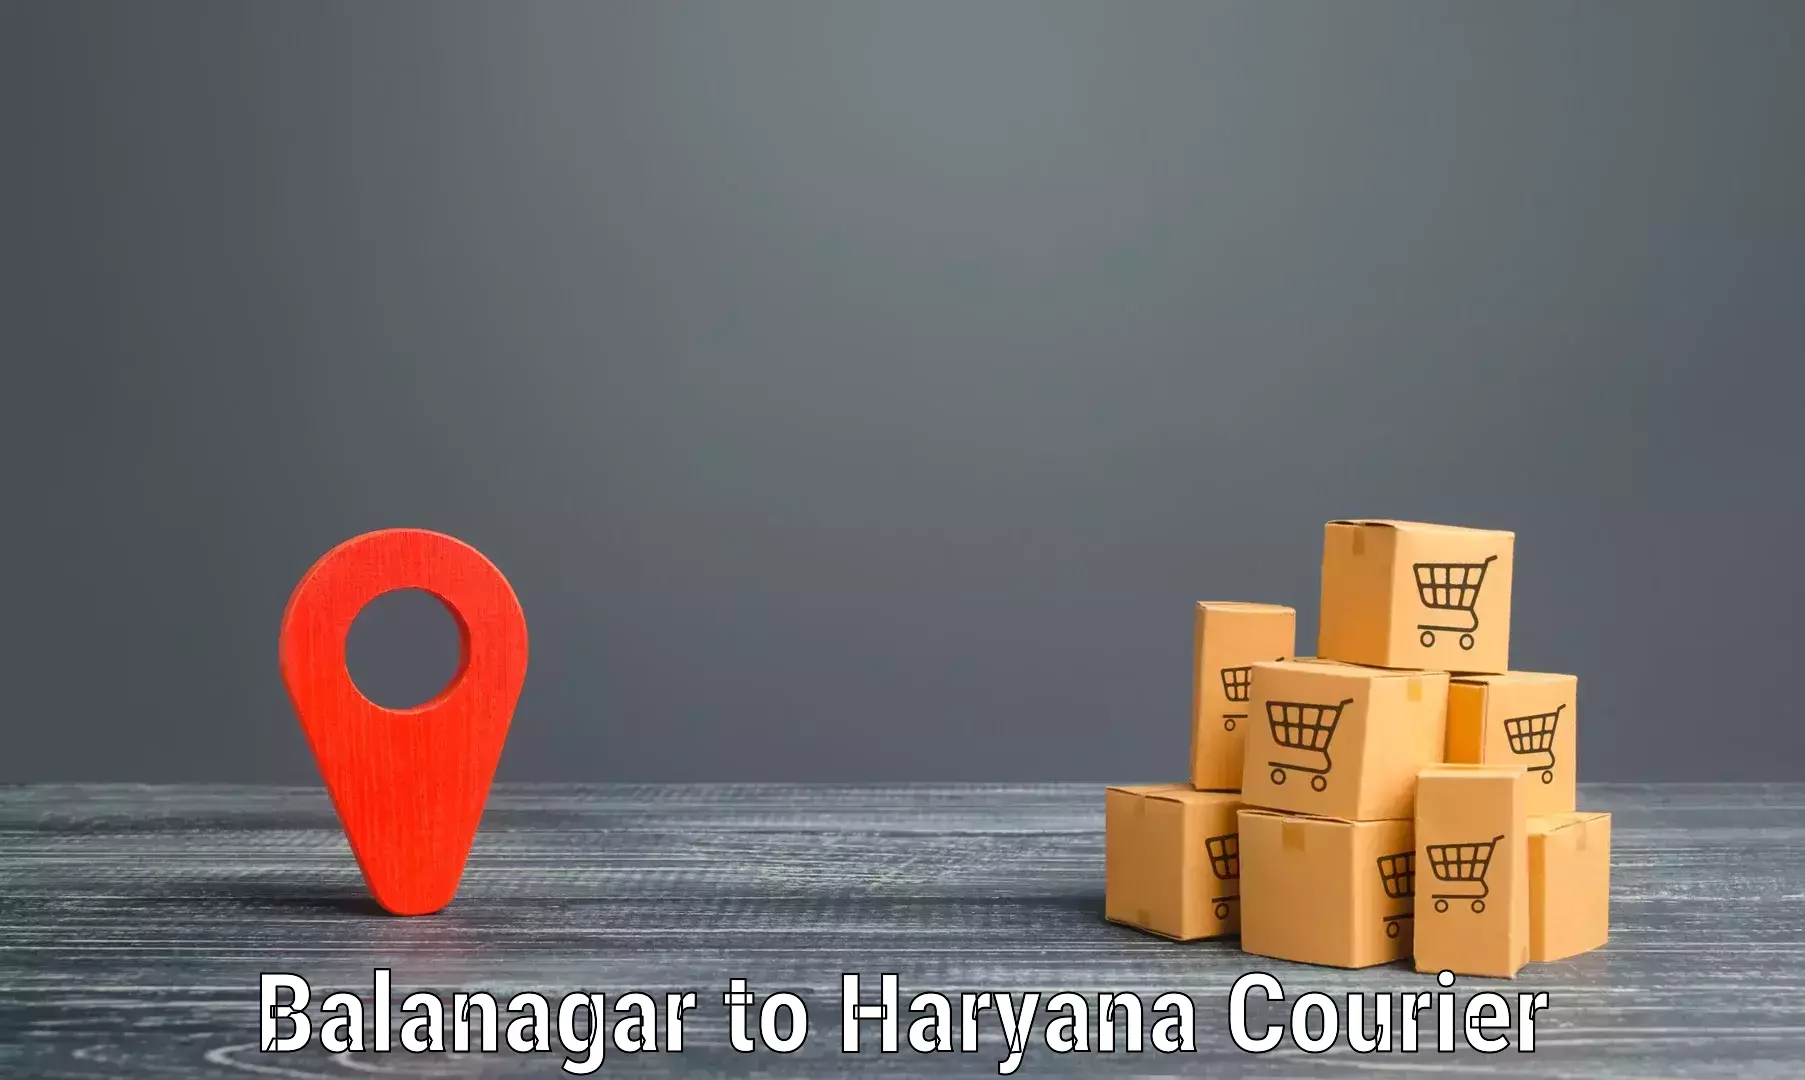 Courier service innovation Balanagar to Gurgaon